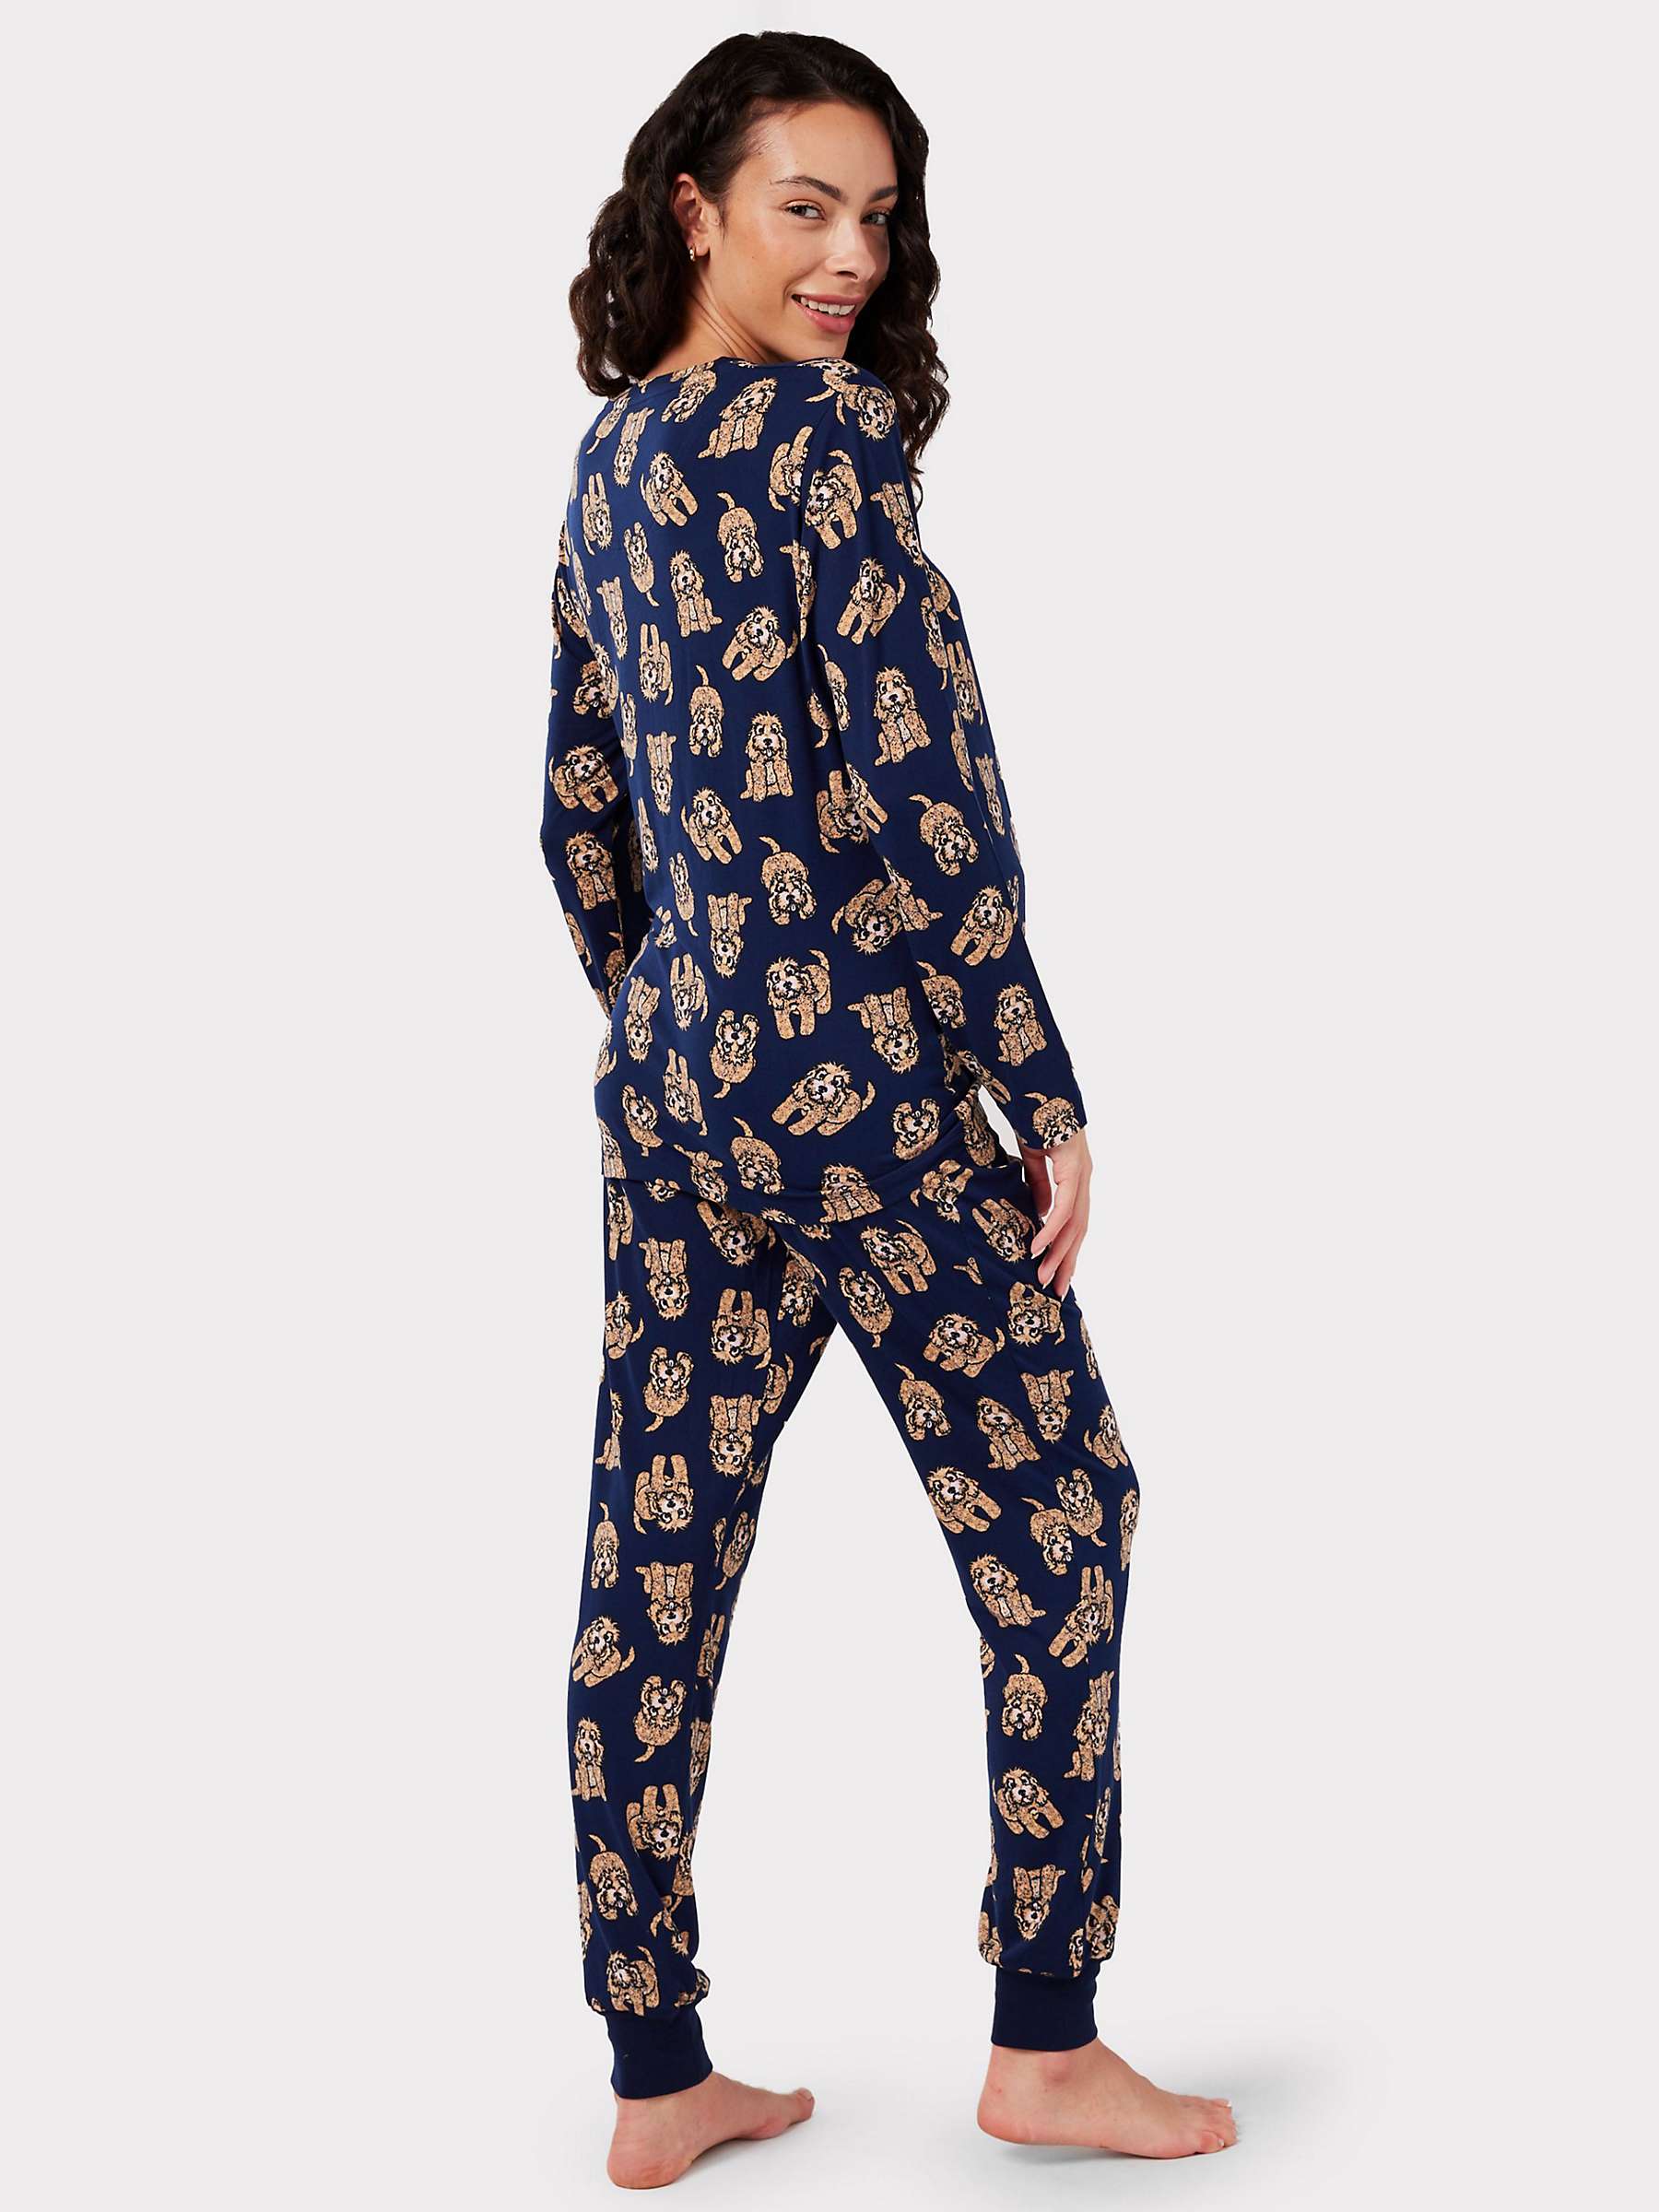 Buy Chelsea Peers Cockapoo Jersey Maternity Pyjama Set, Navy Online at johnlewis.com